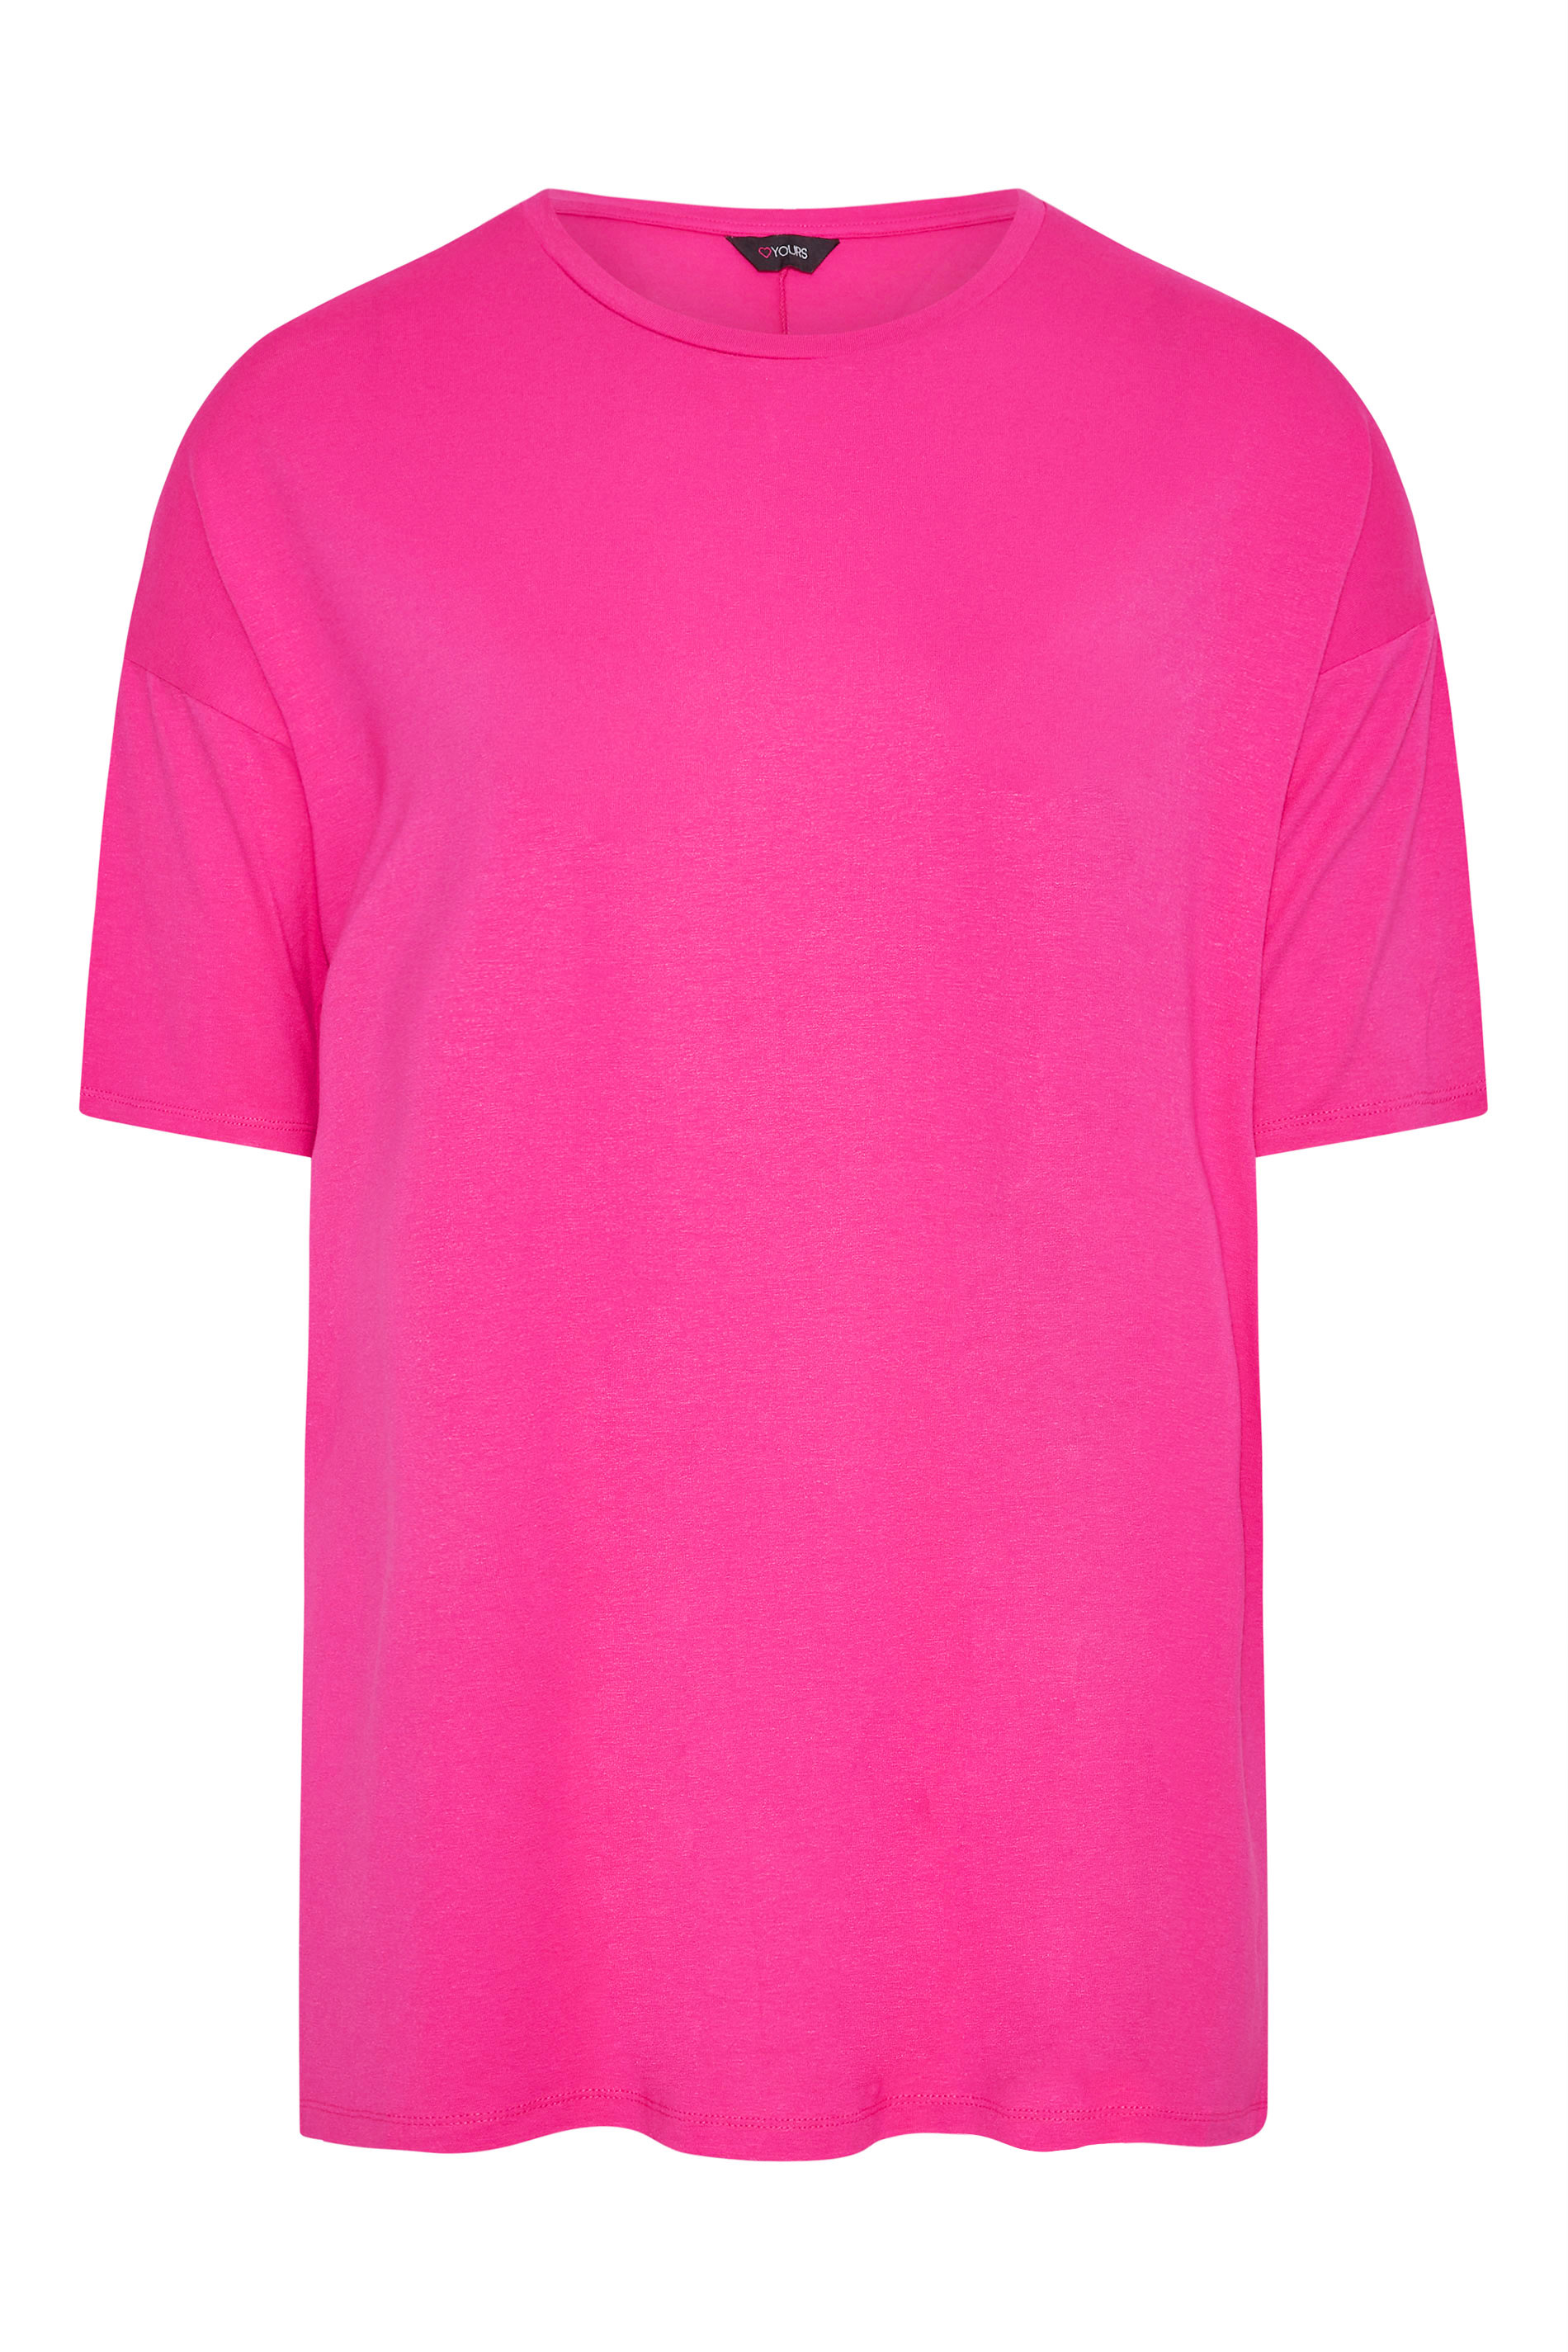 Grande taille  Tops Grande taille  Tops Casual | T-Shirt Rose Design Oversize en Jersey - UU02783